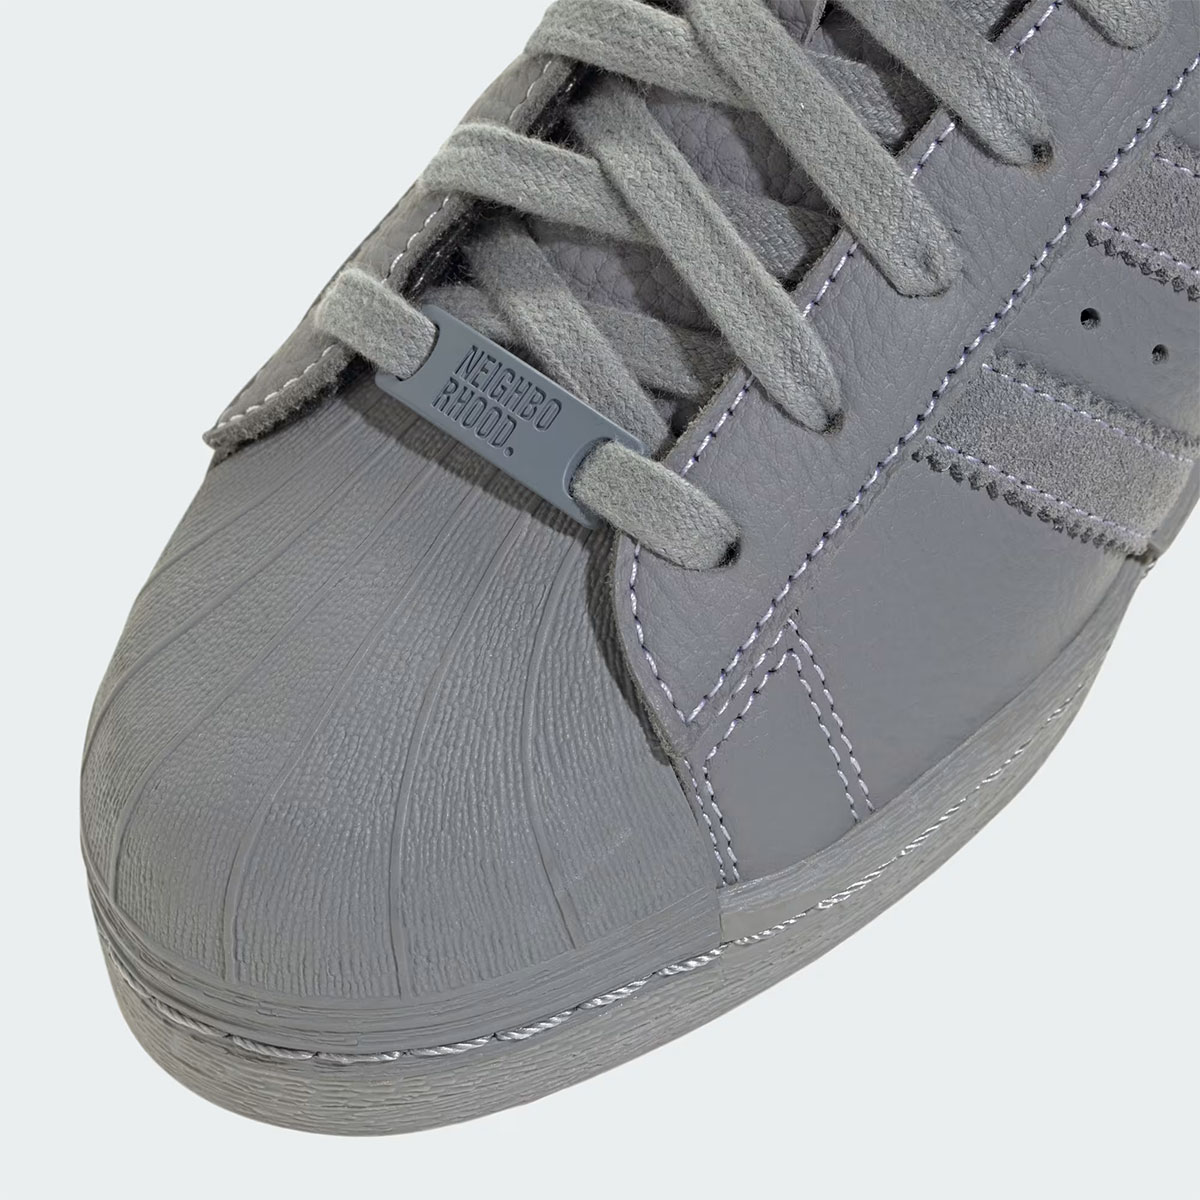 NEIGHBORHOOD adidas Superstar IE6115 Release Date | SneakerNews.com